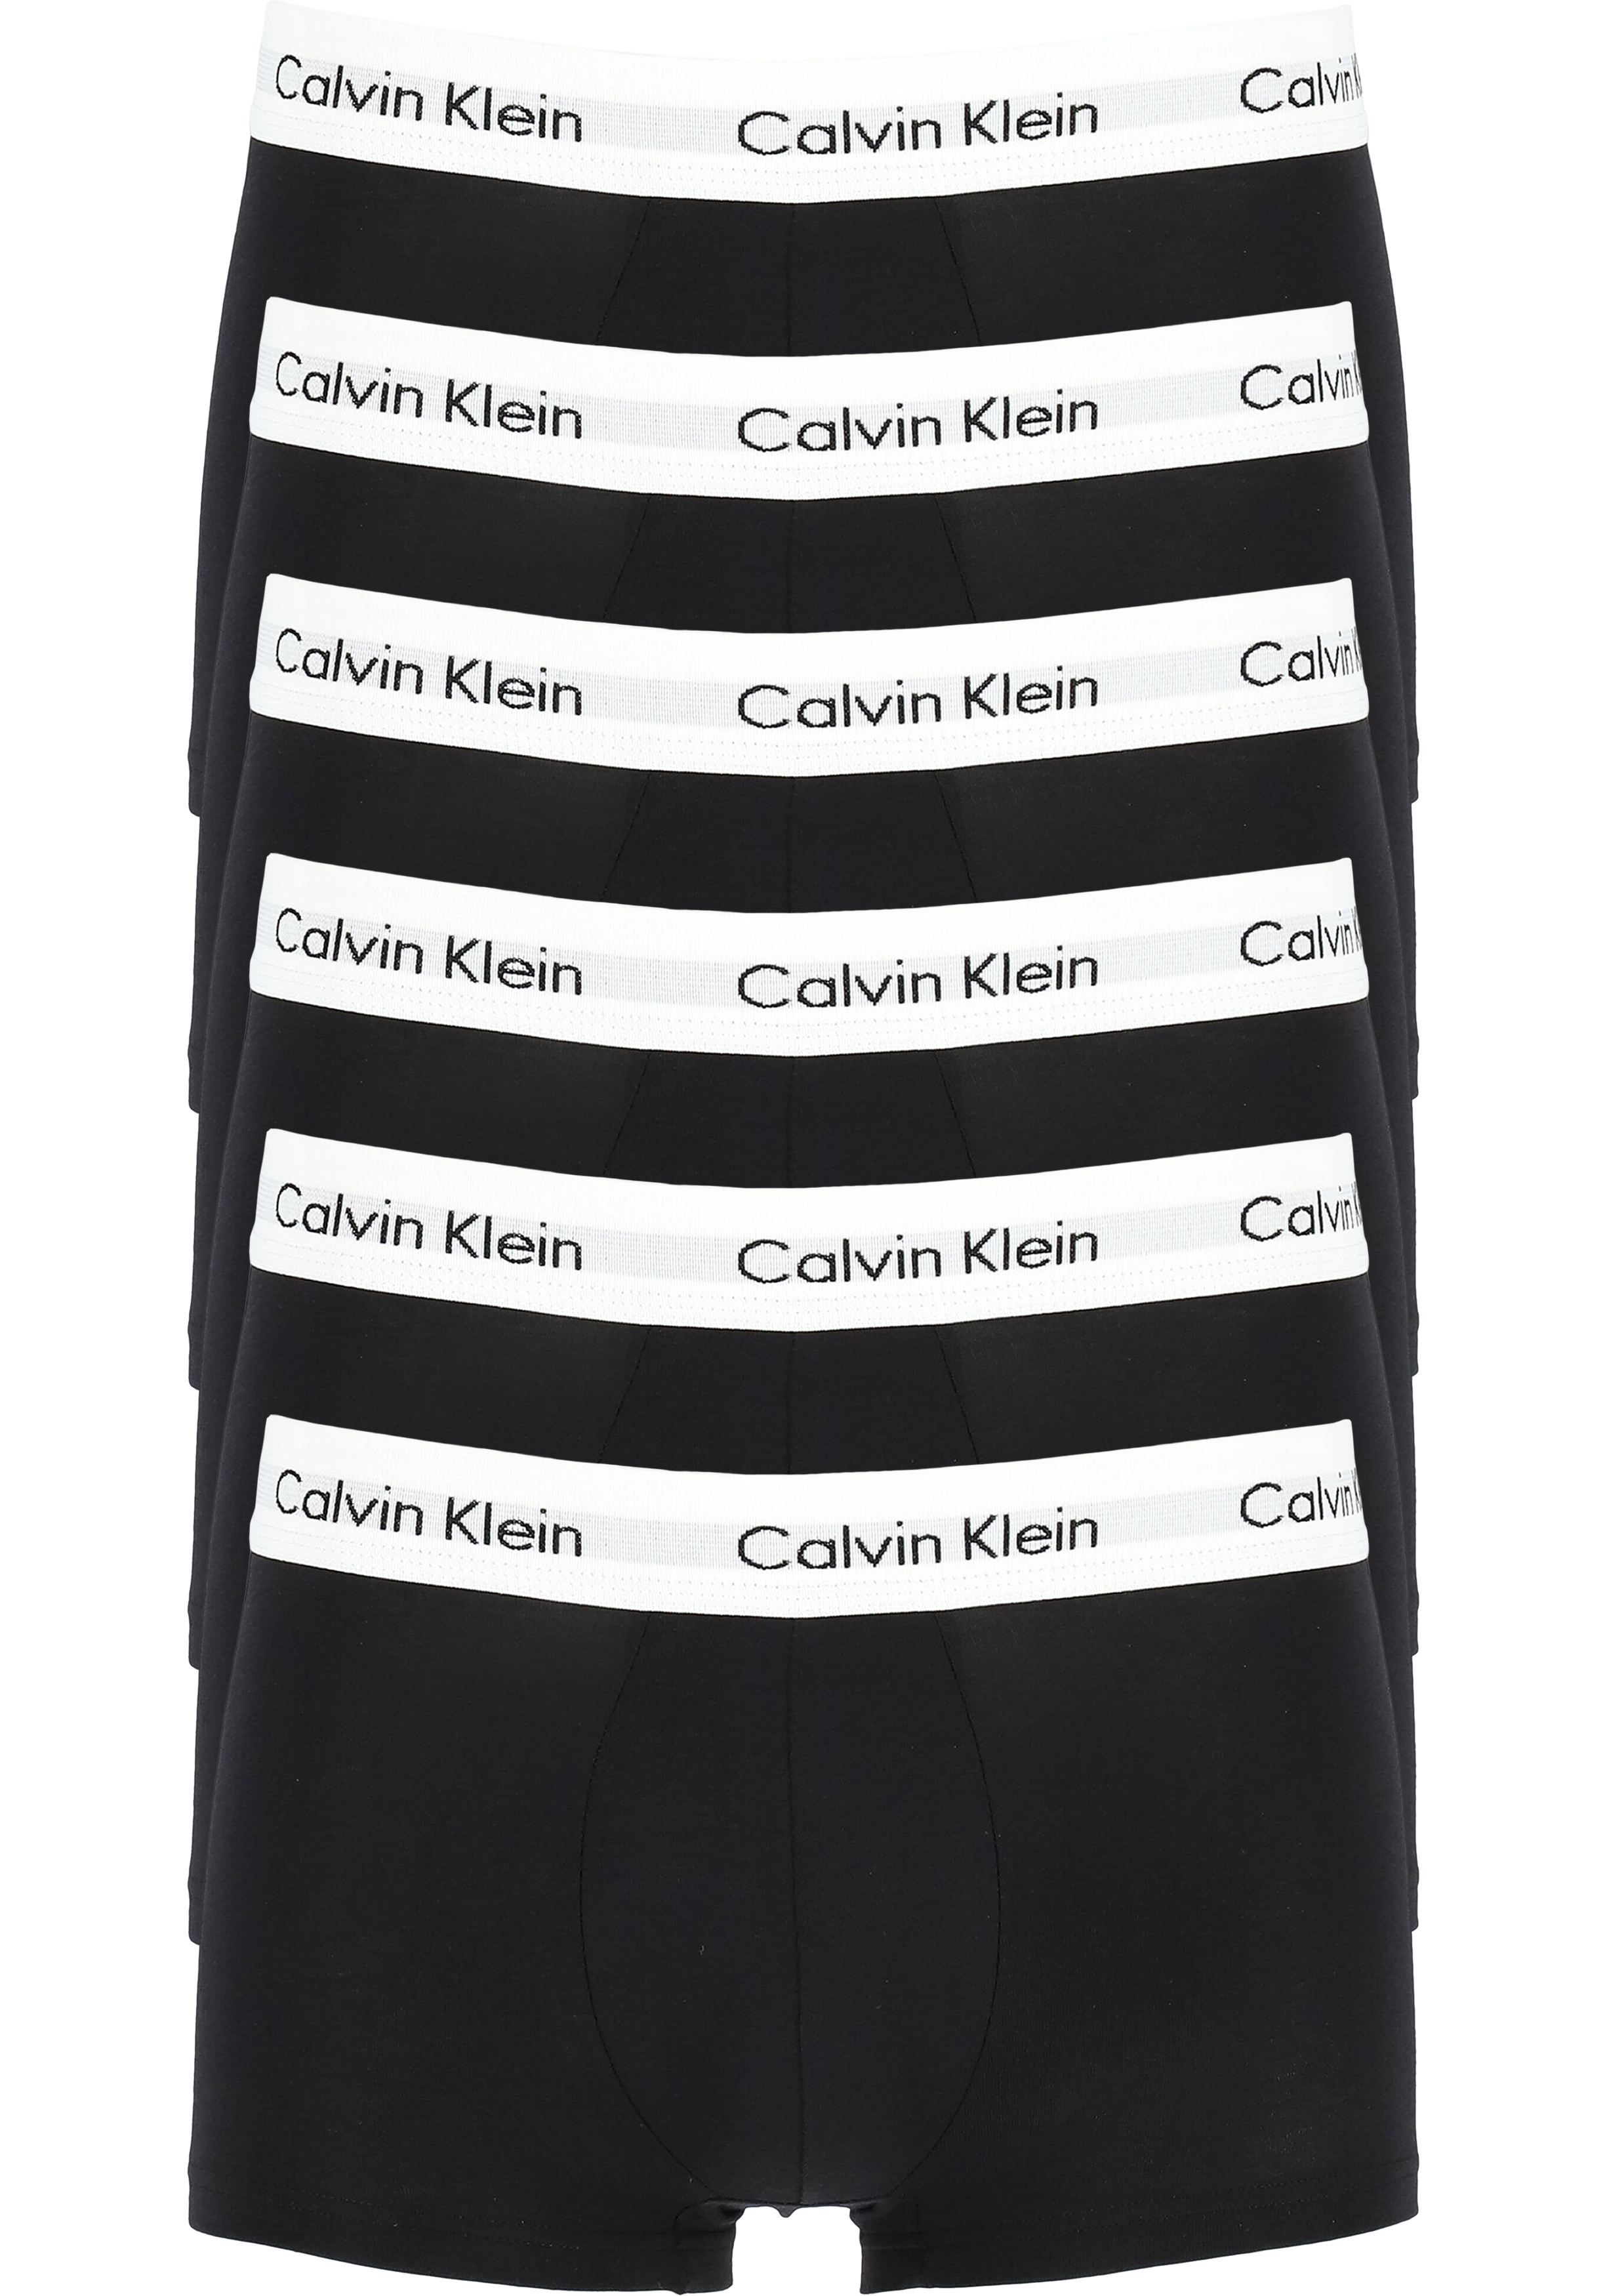 Actie 6-pack: Calvin Klein low rise trunks, lage heren boxers kort, zwart